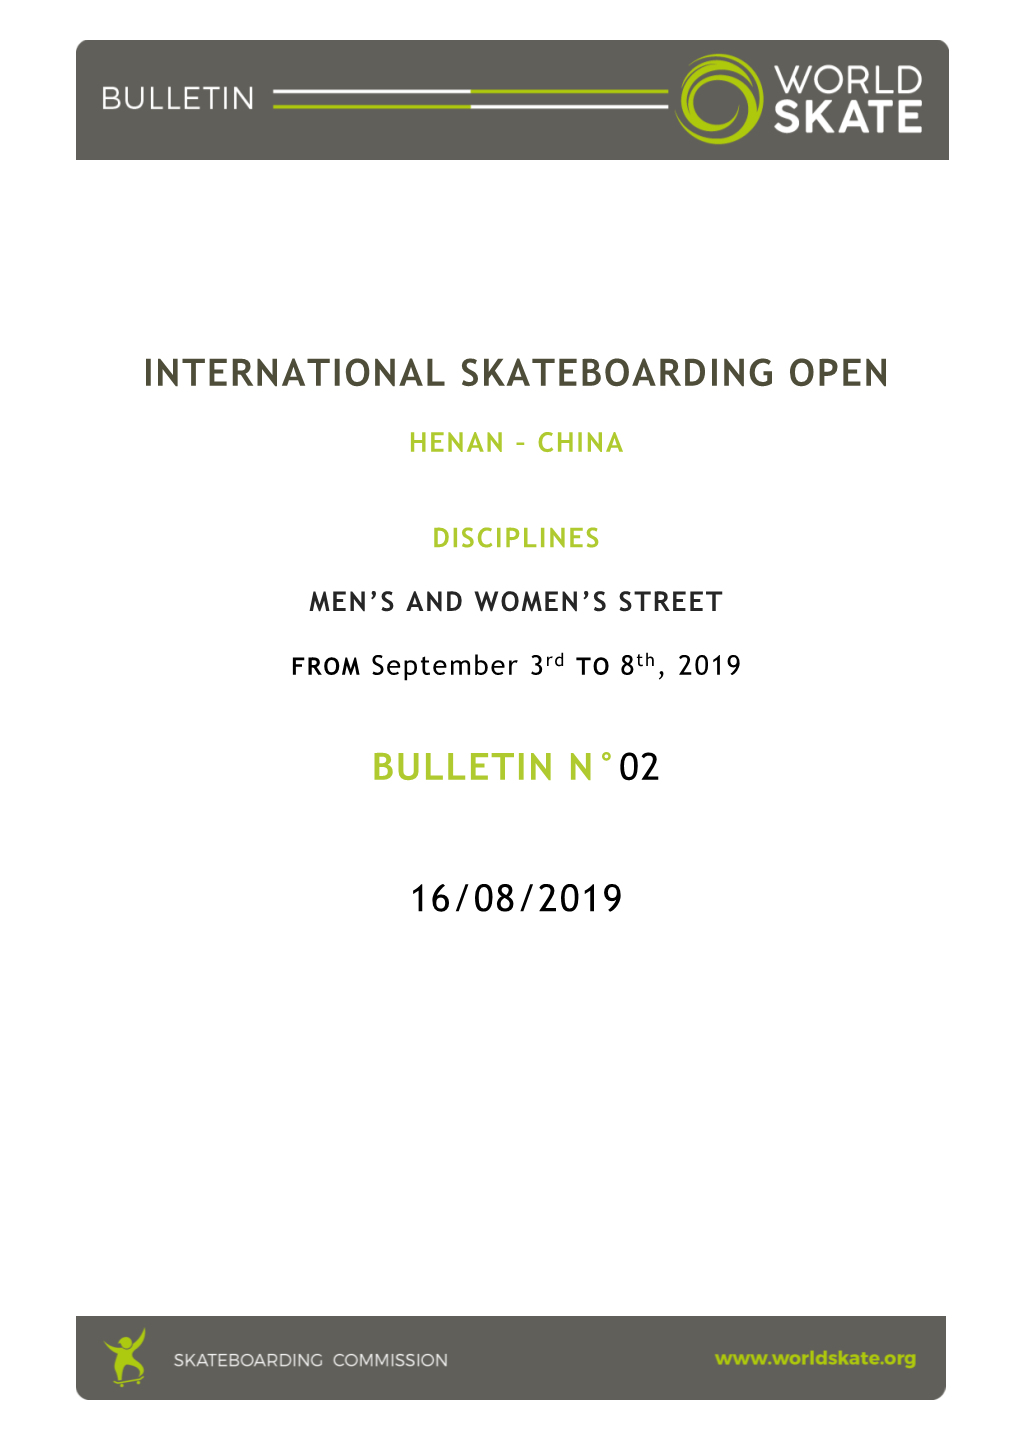 International Skateboarding Open Bulletin N